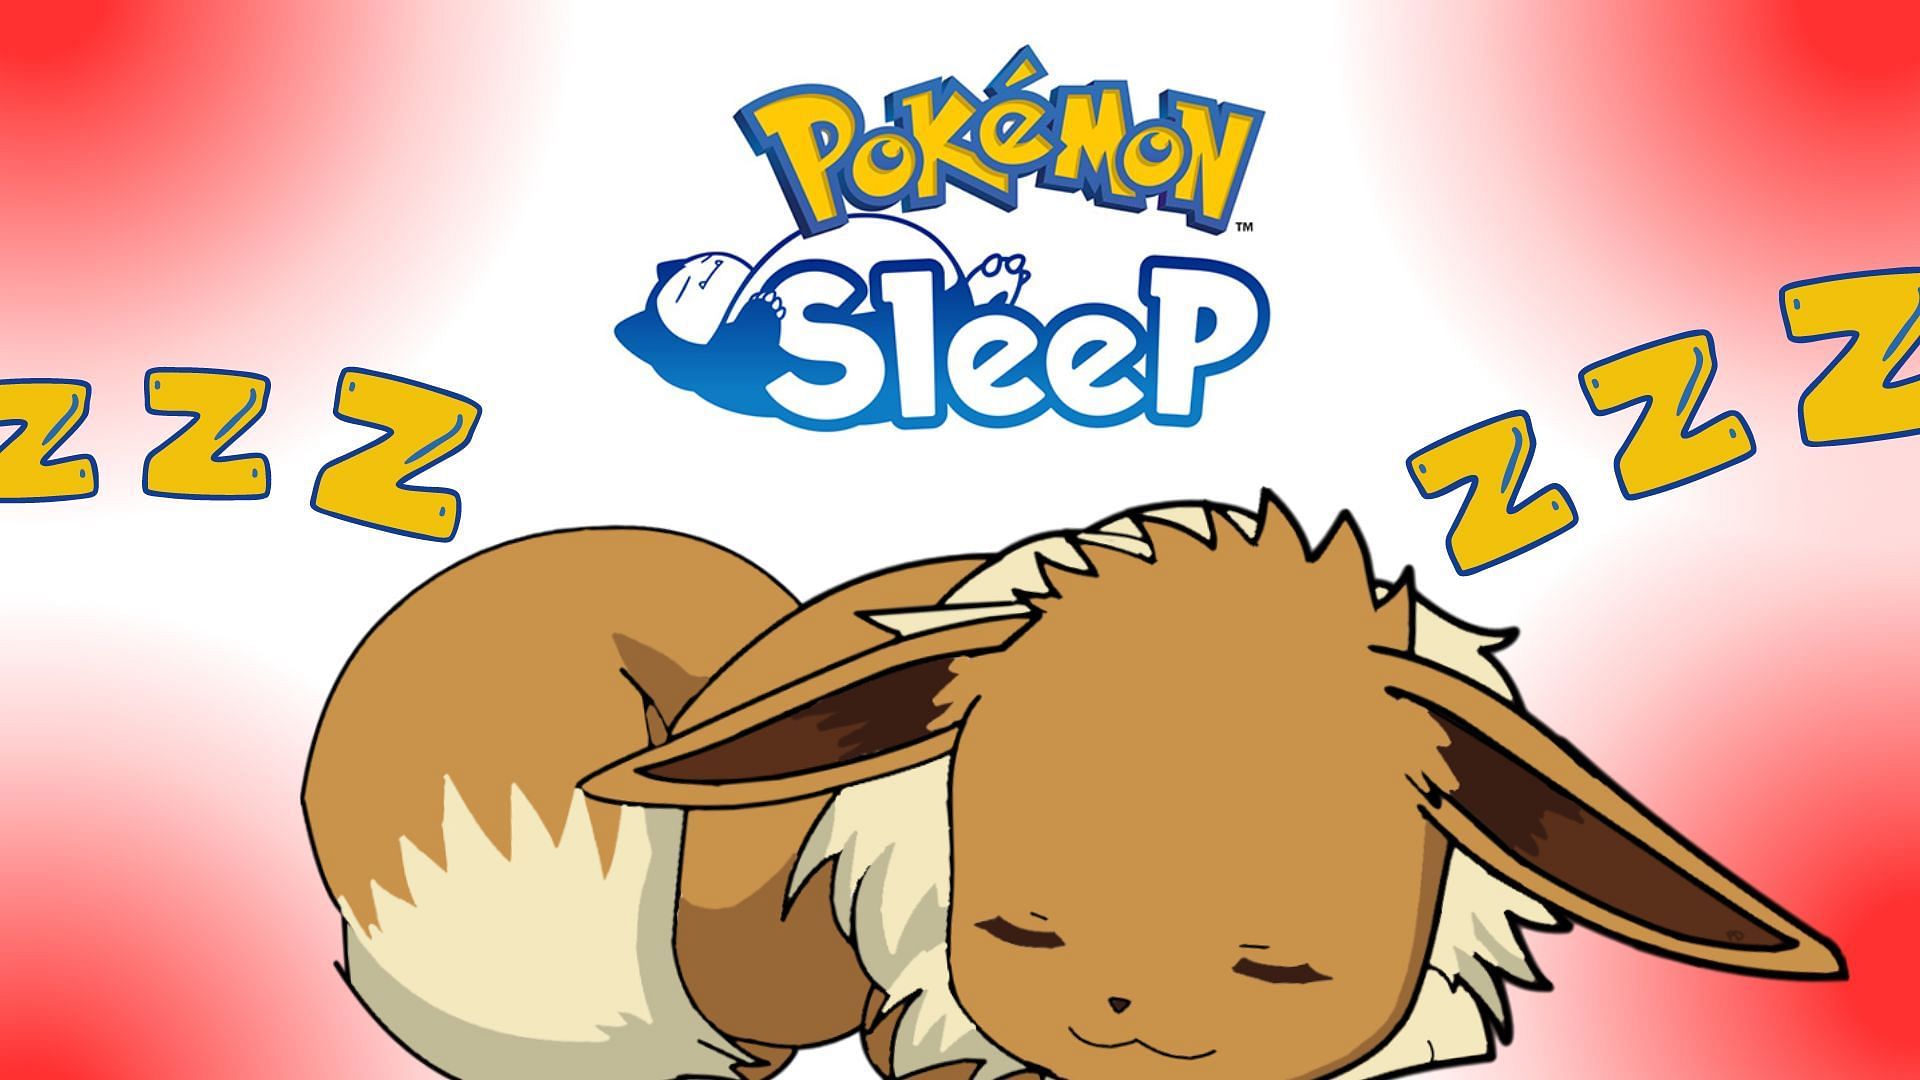 Pokemon Go Plus+ and Pokemon Sleep finally coming this summer